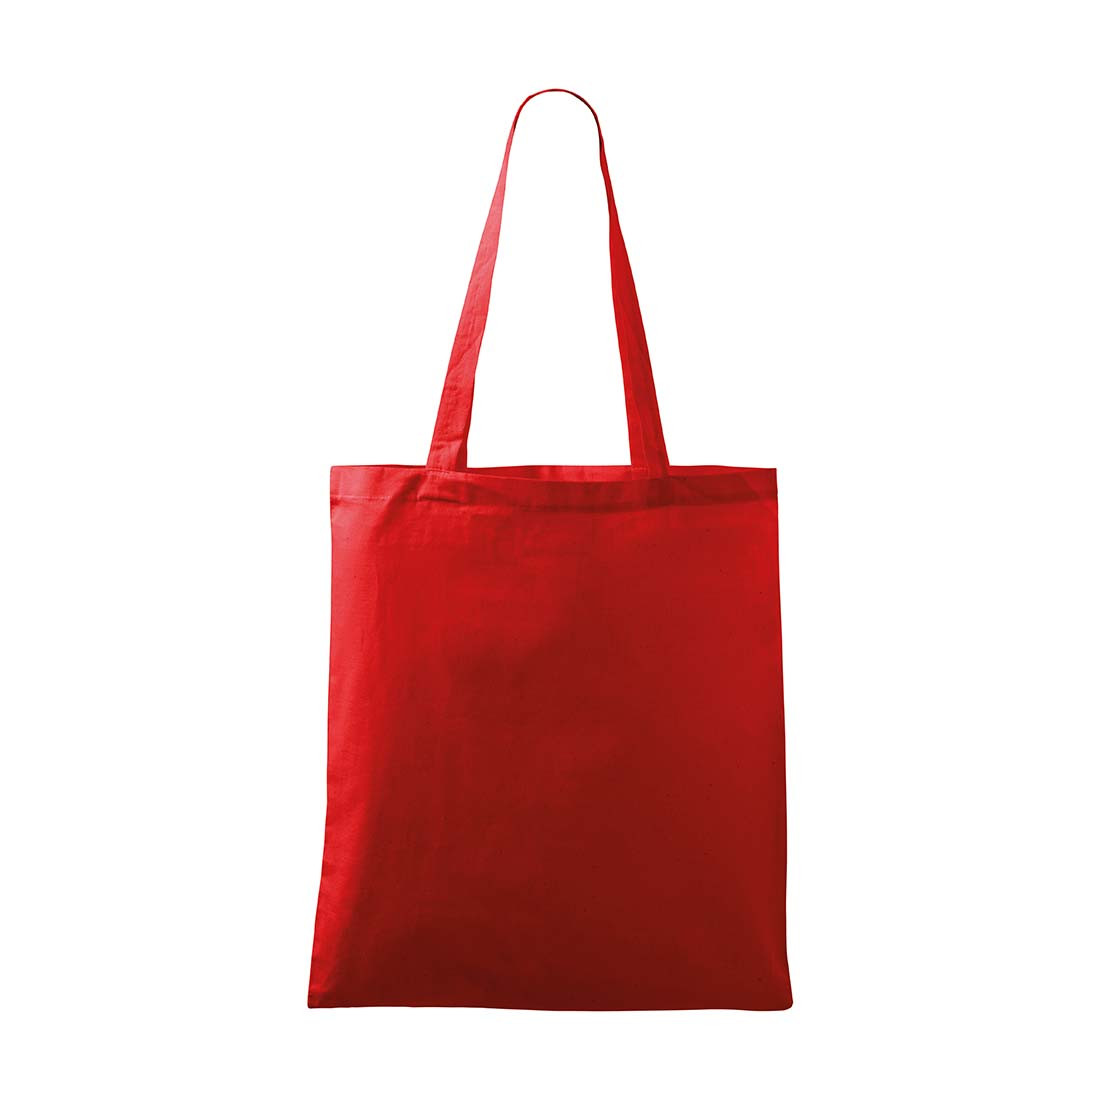 HANDY Shopping Bag - Technical